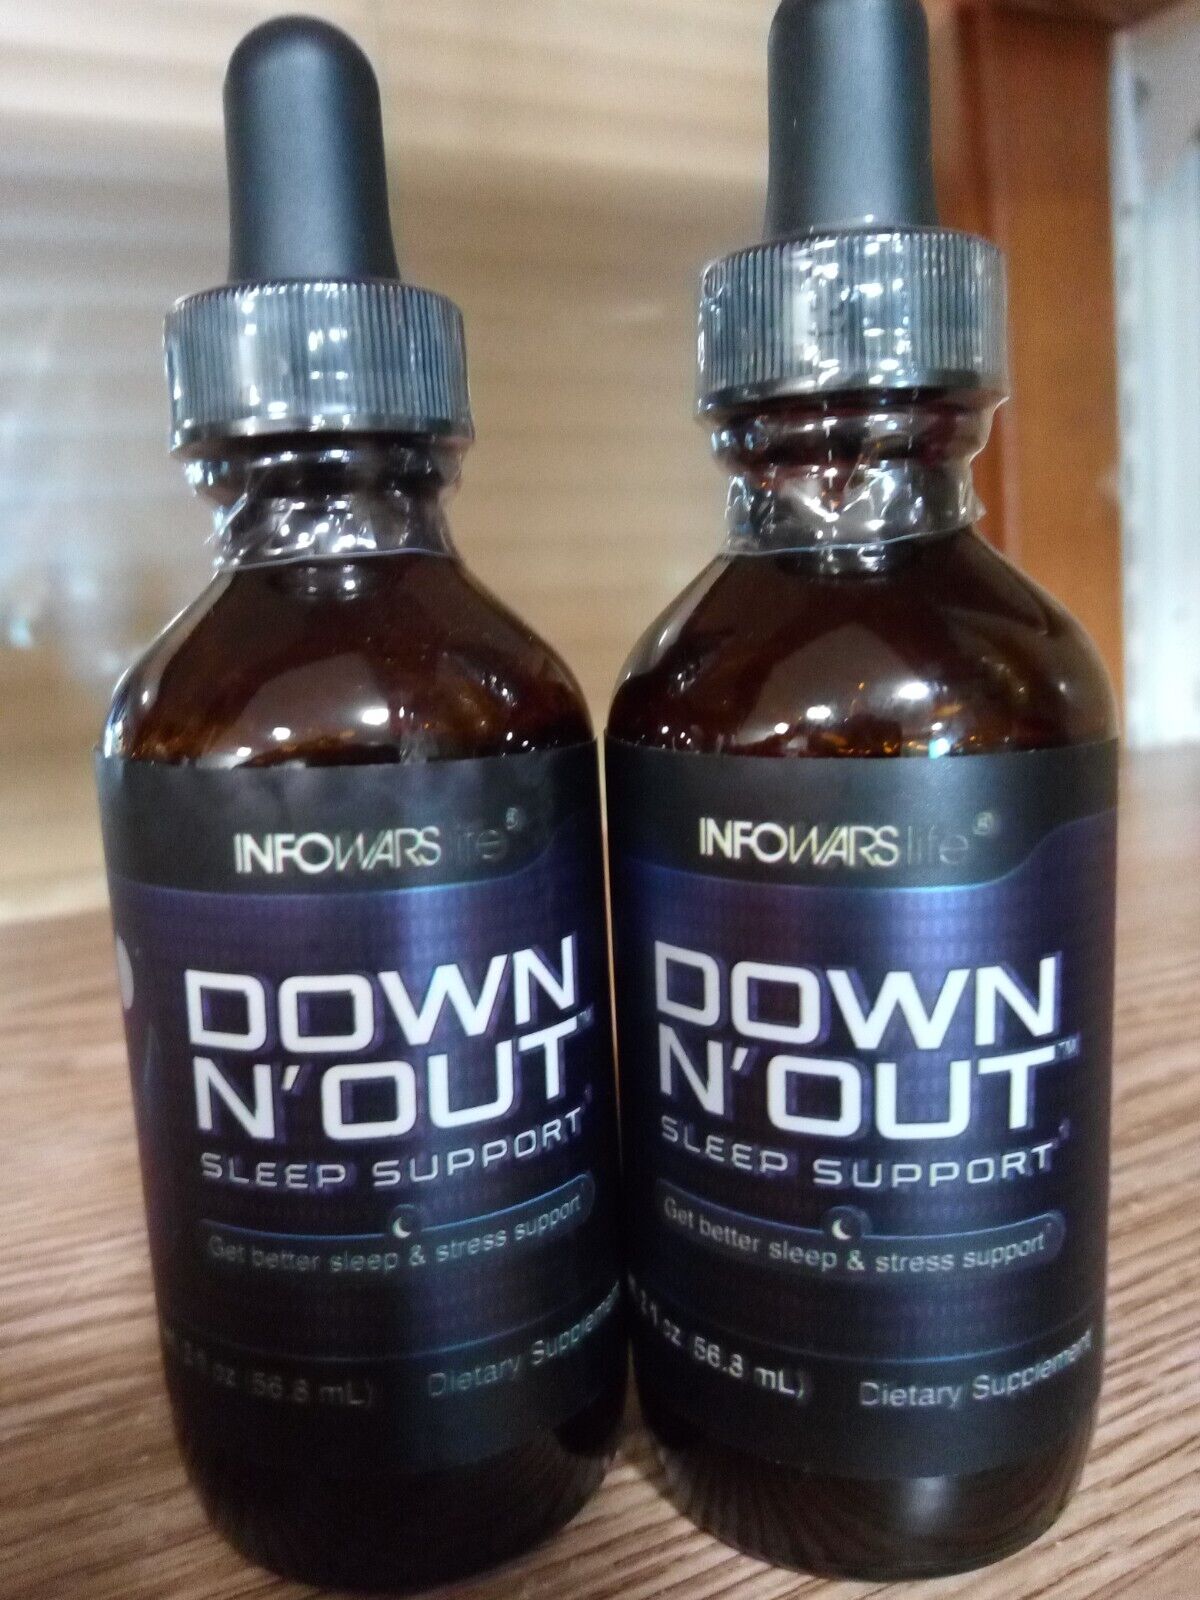 Down N Out 2oz liquid herbs & 4mg melatonin for a little extra sleep (2pk) $89